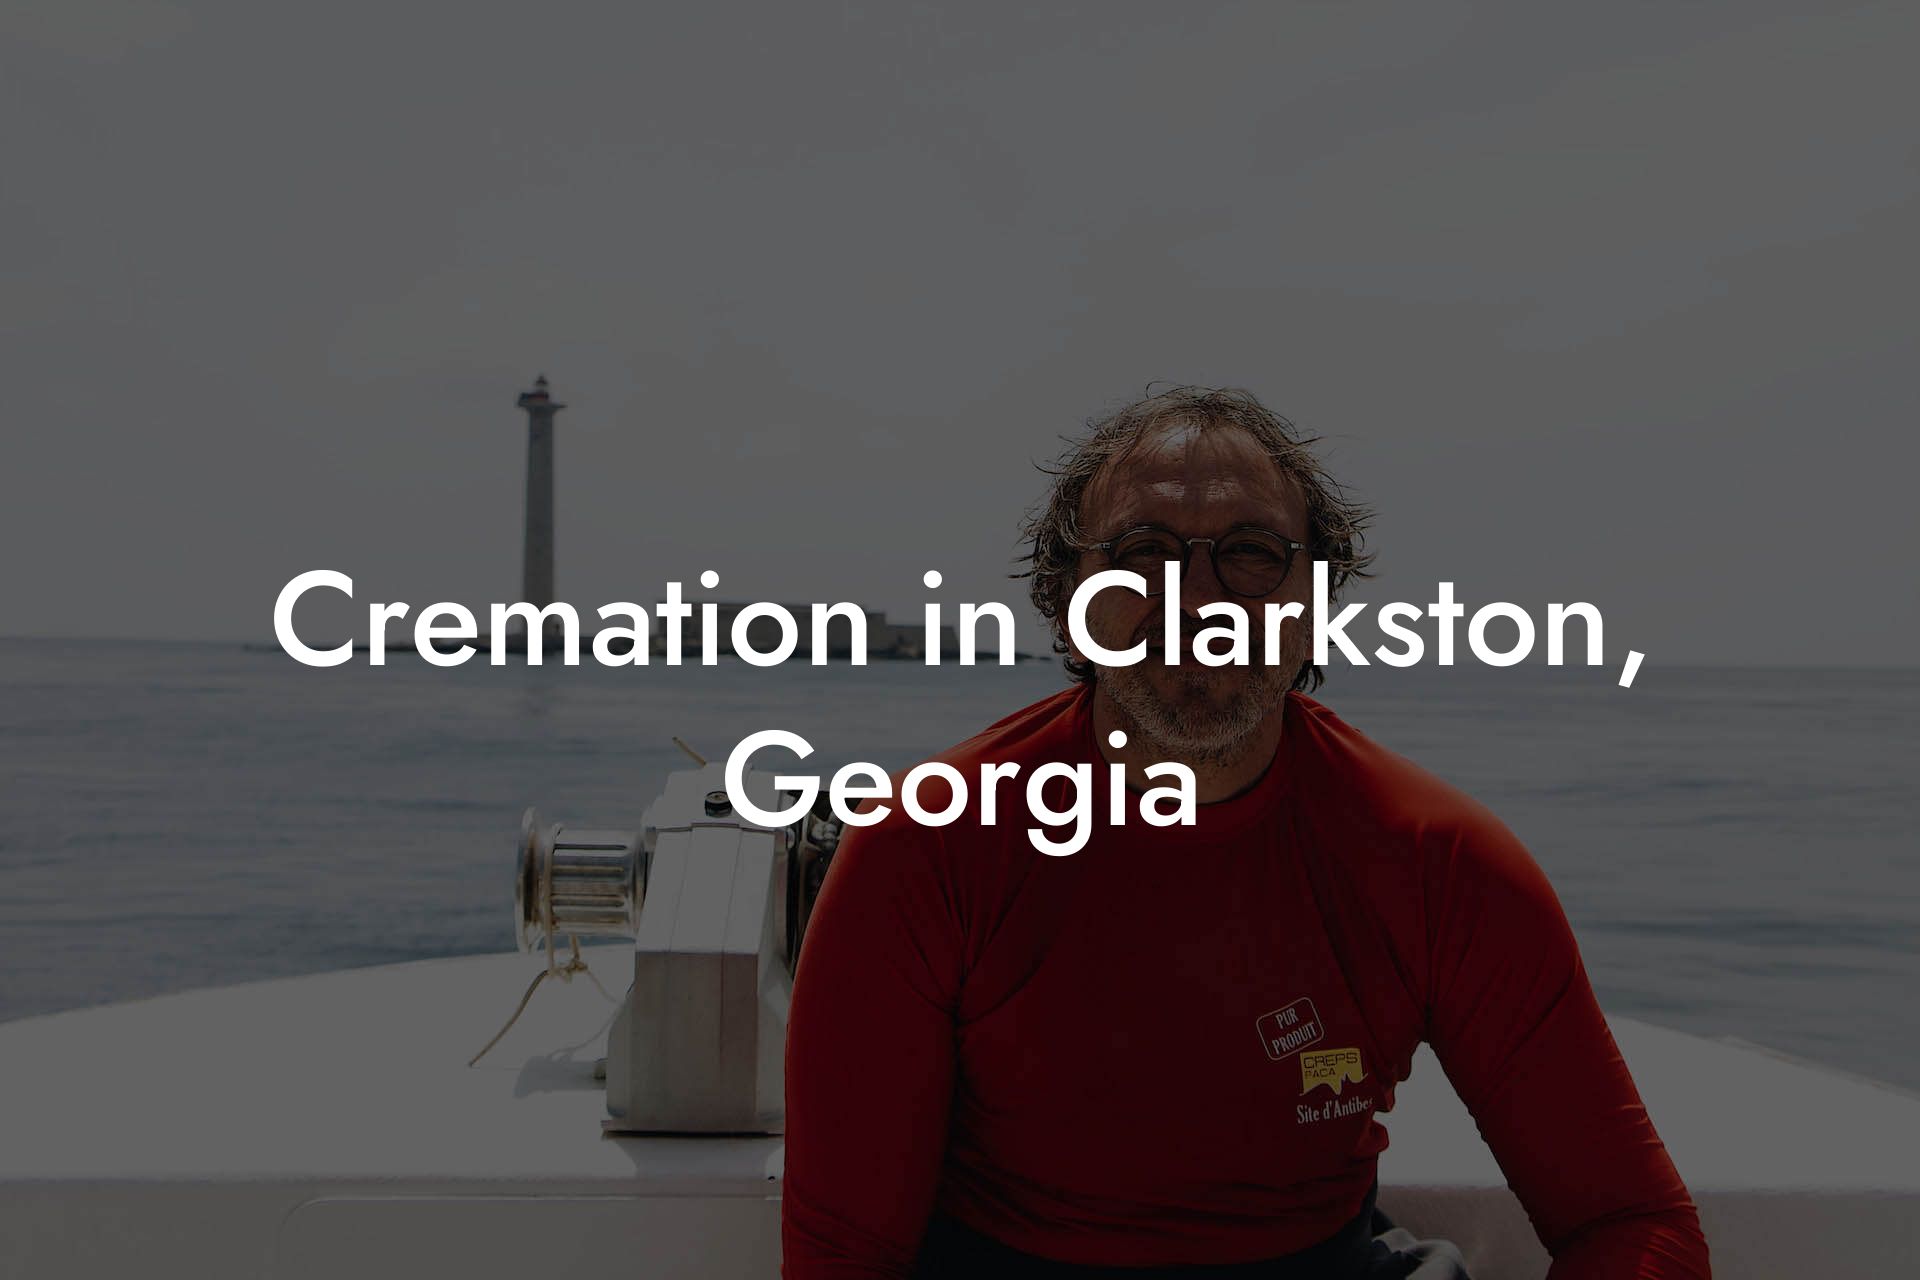 Cremation in Clarkston, Georgia